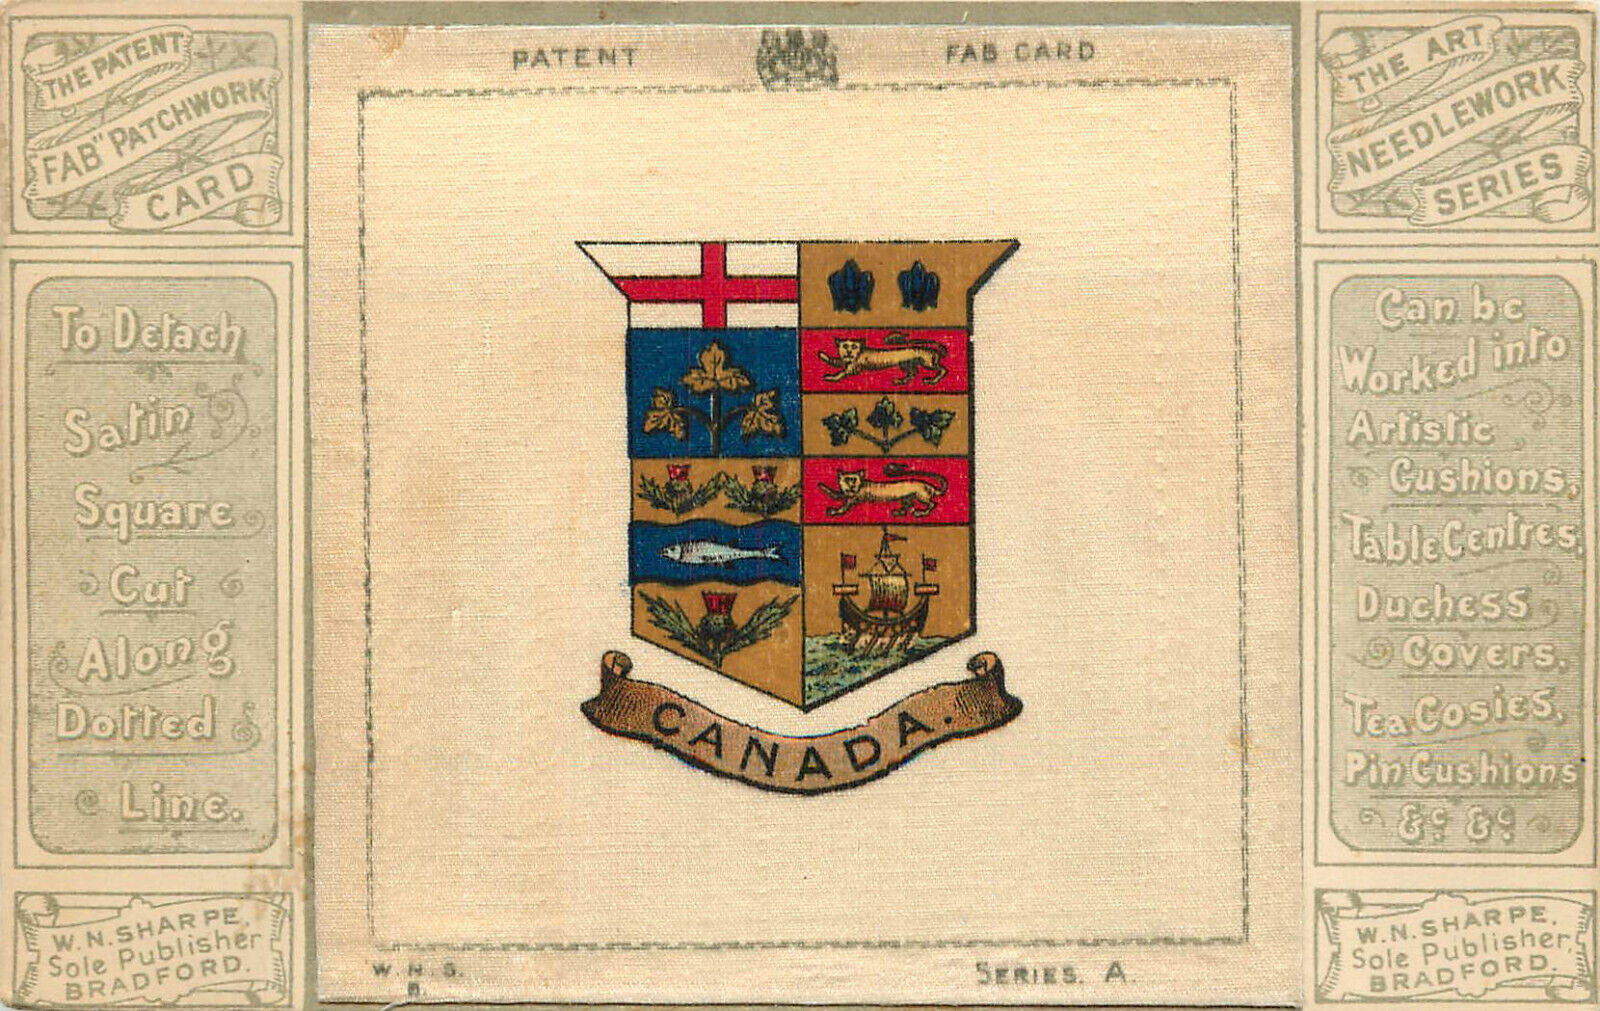 Postcard Pin Cushion Fab Patchwork Card W.N. sharpe Publ. Canada Series A Needle